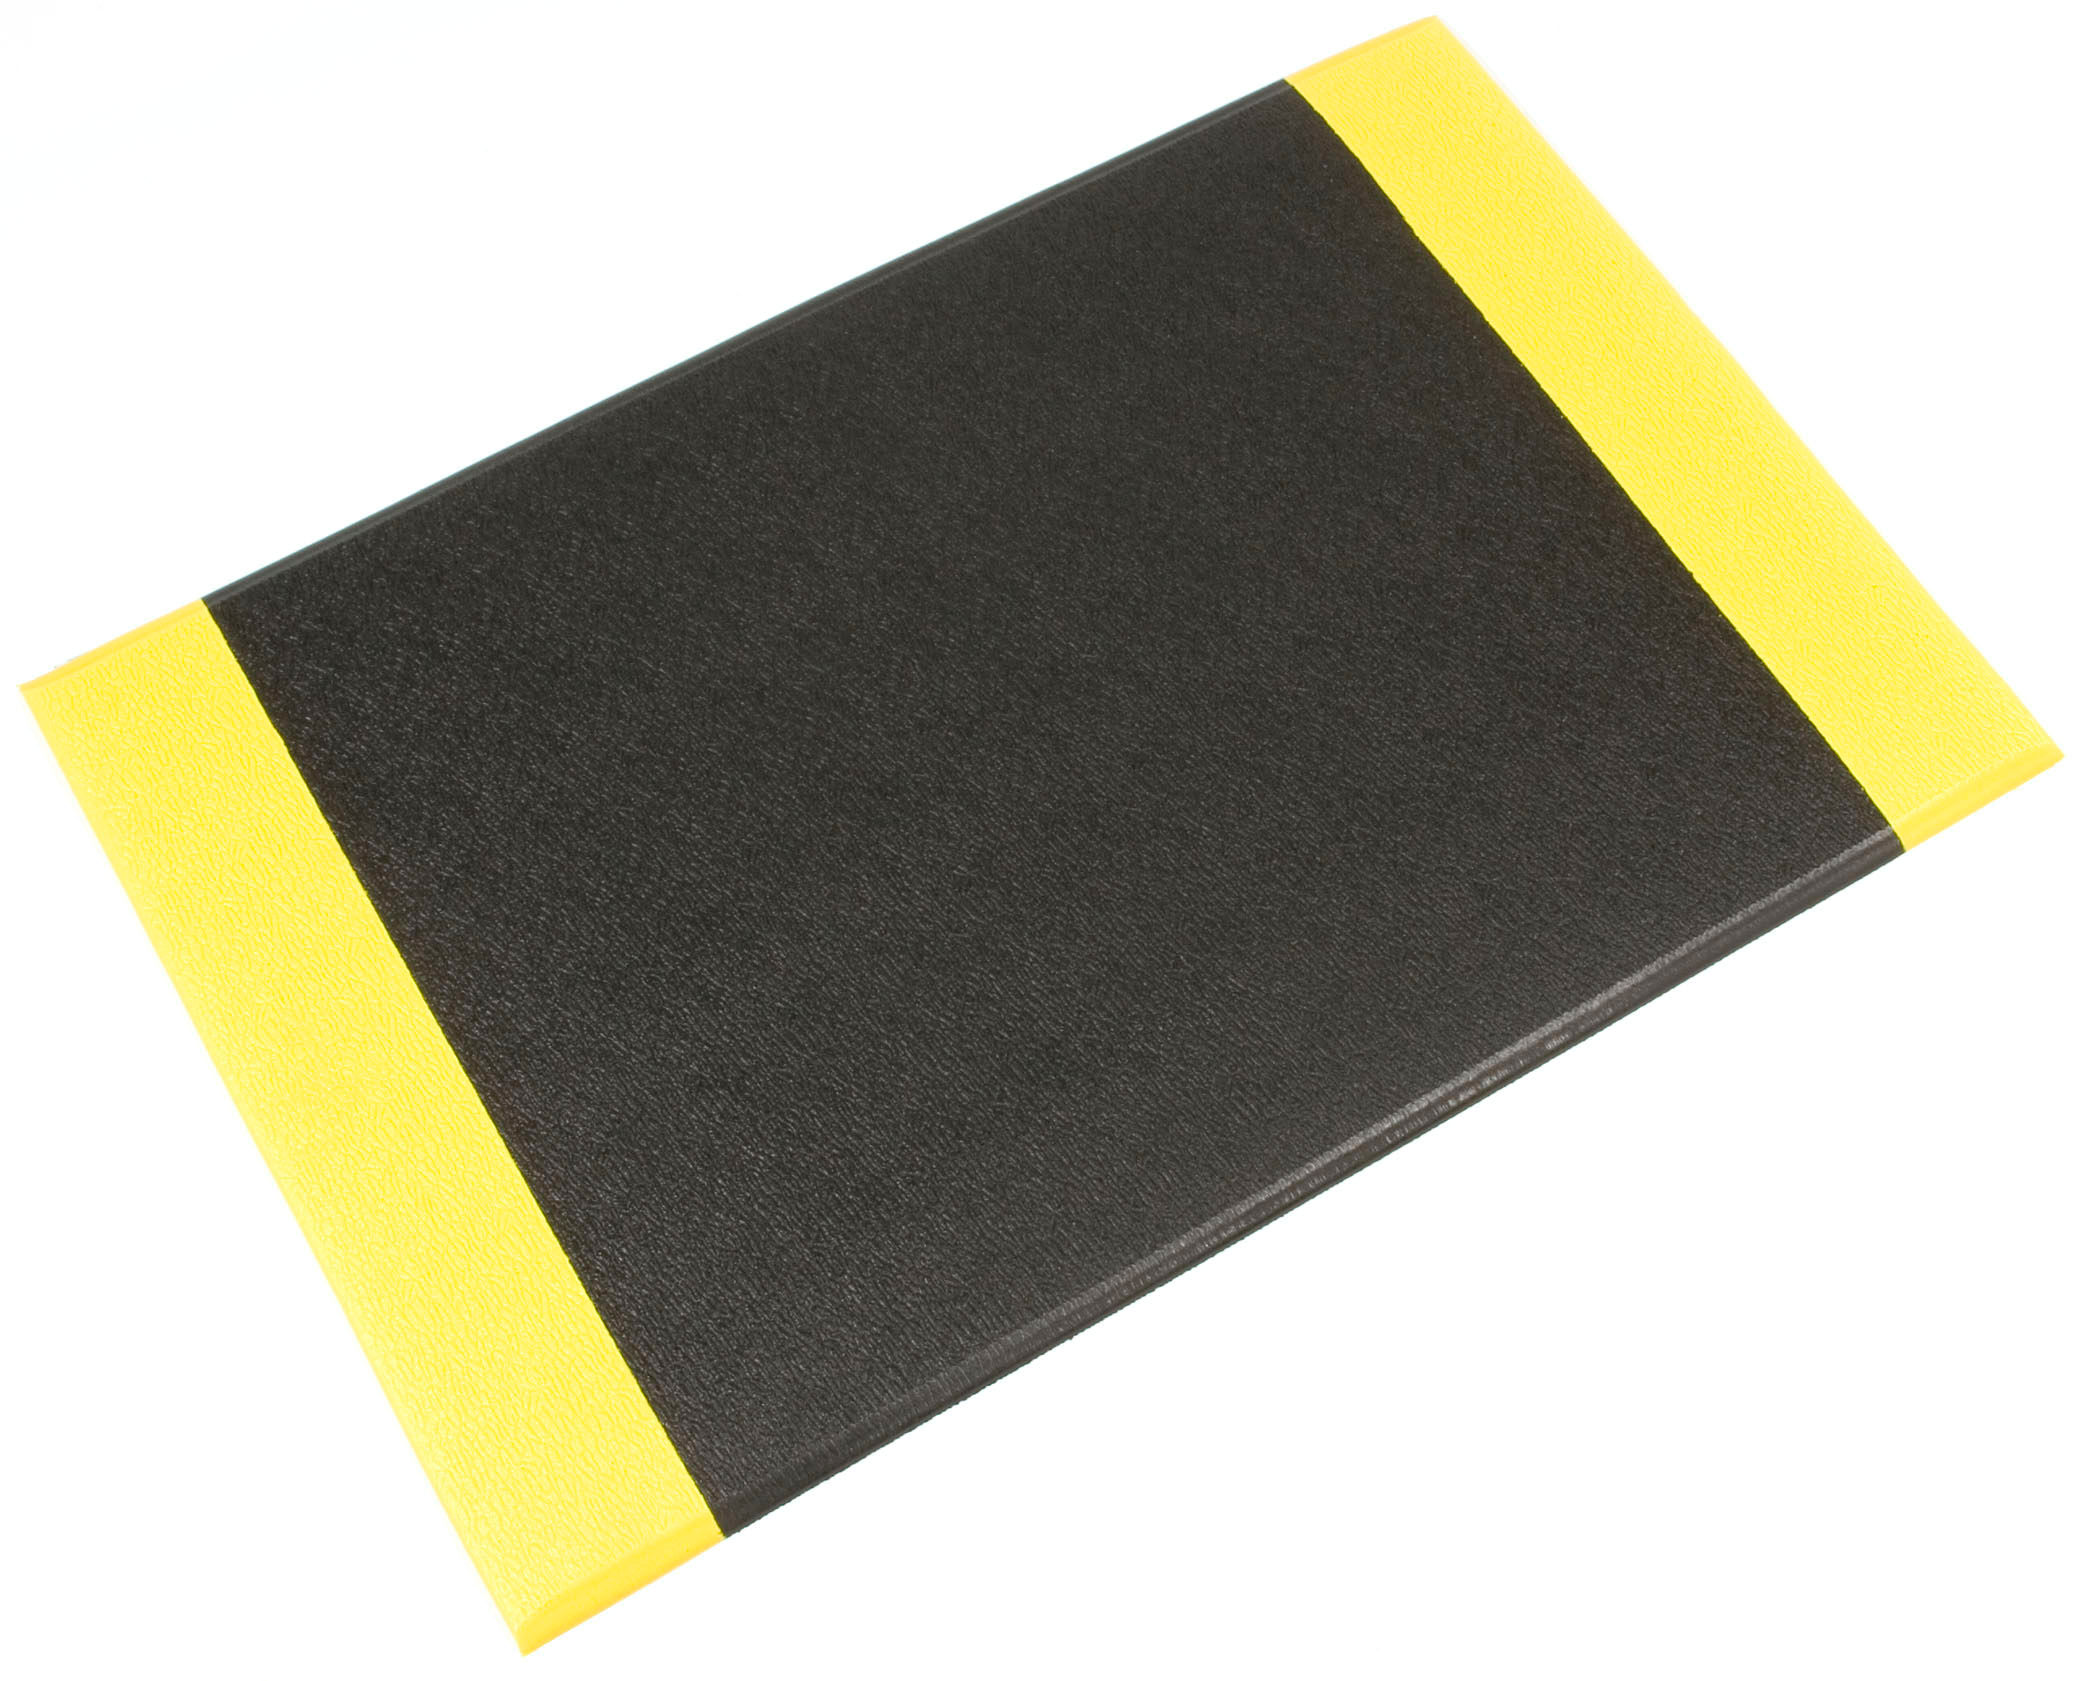 Orthomat Charcoal/Yellow 18.3m x 900mm